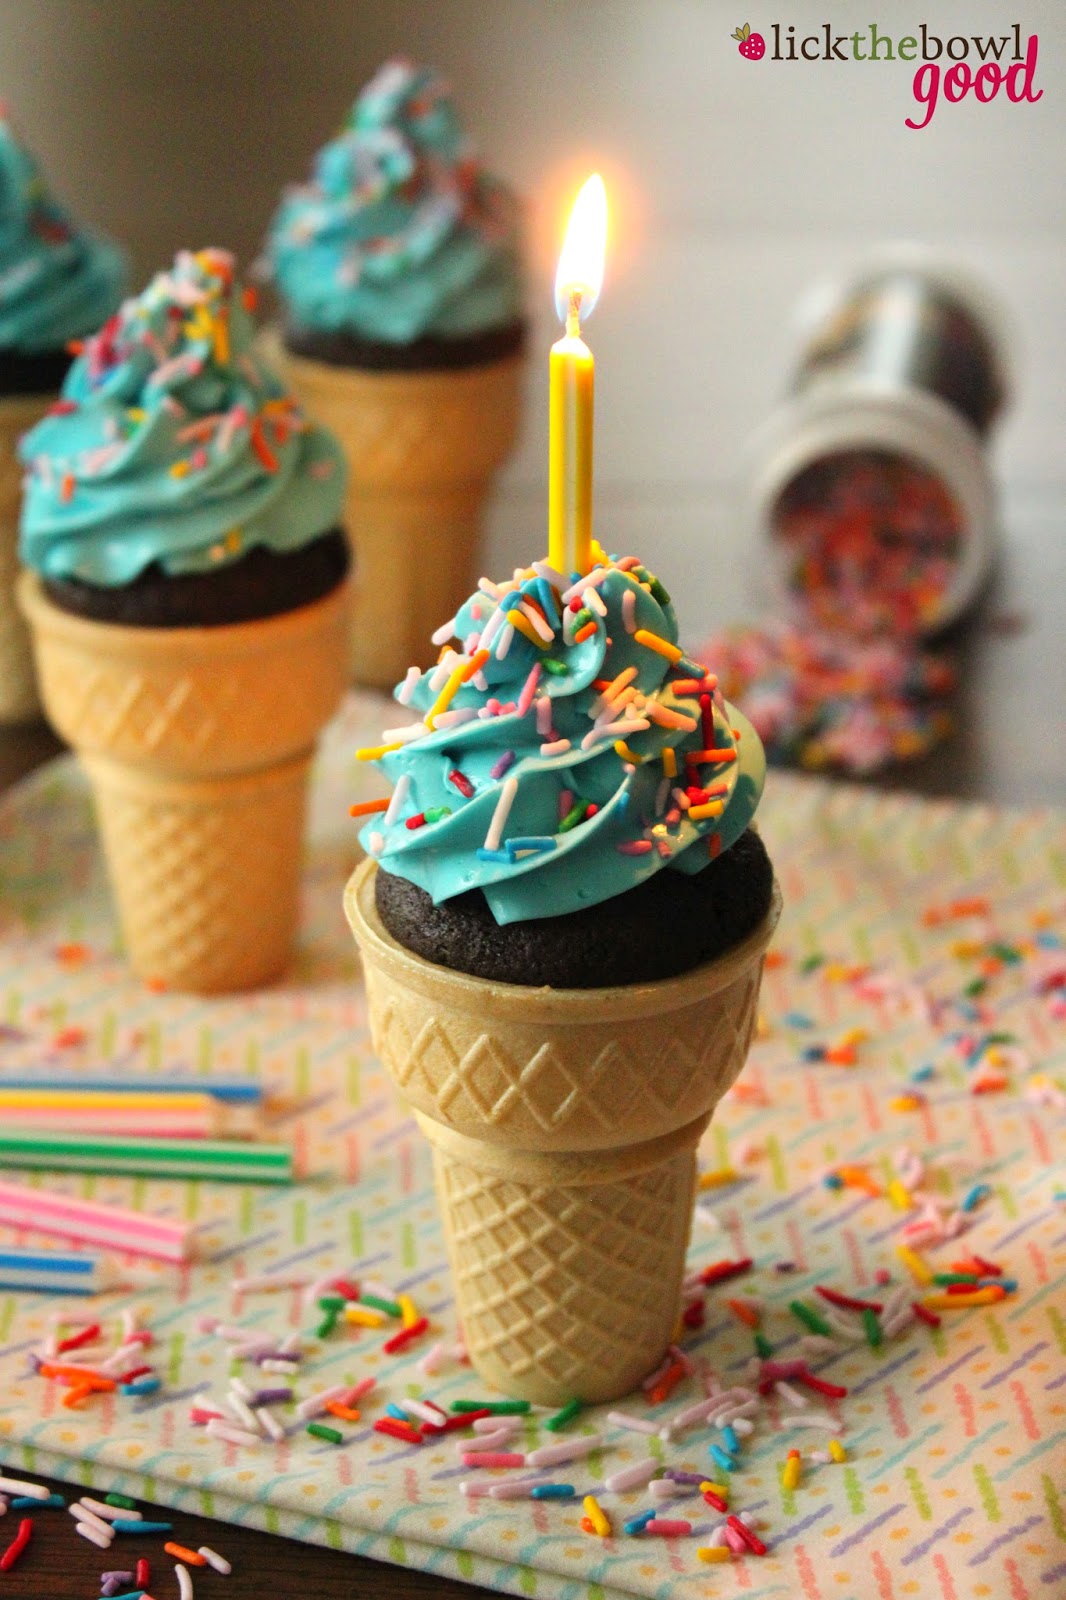 Lick The Bowl Good: Ice Cream Cone Cupcakes & The Pillsbury Giveaway Winner